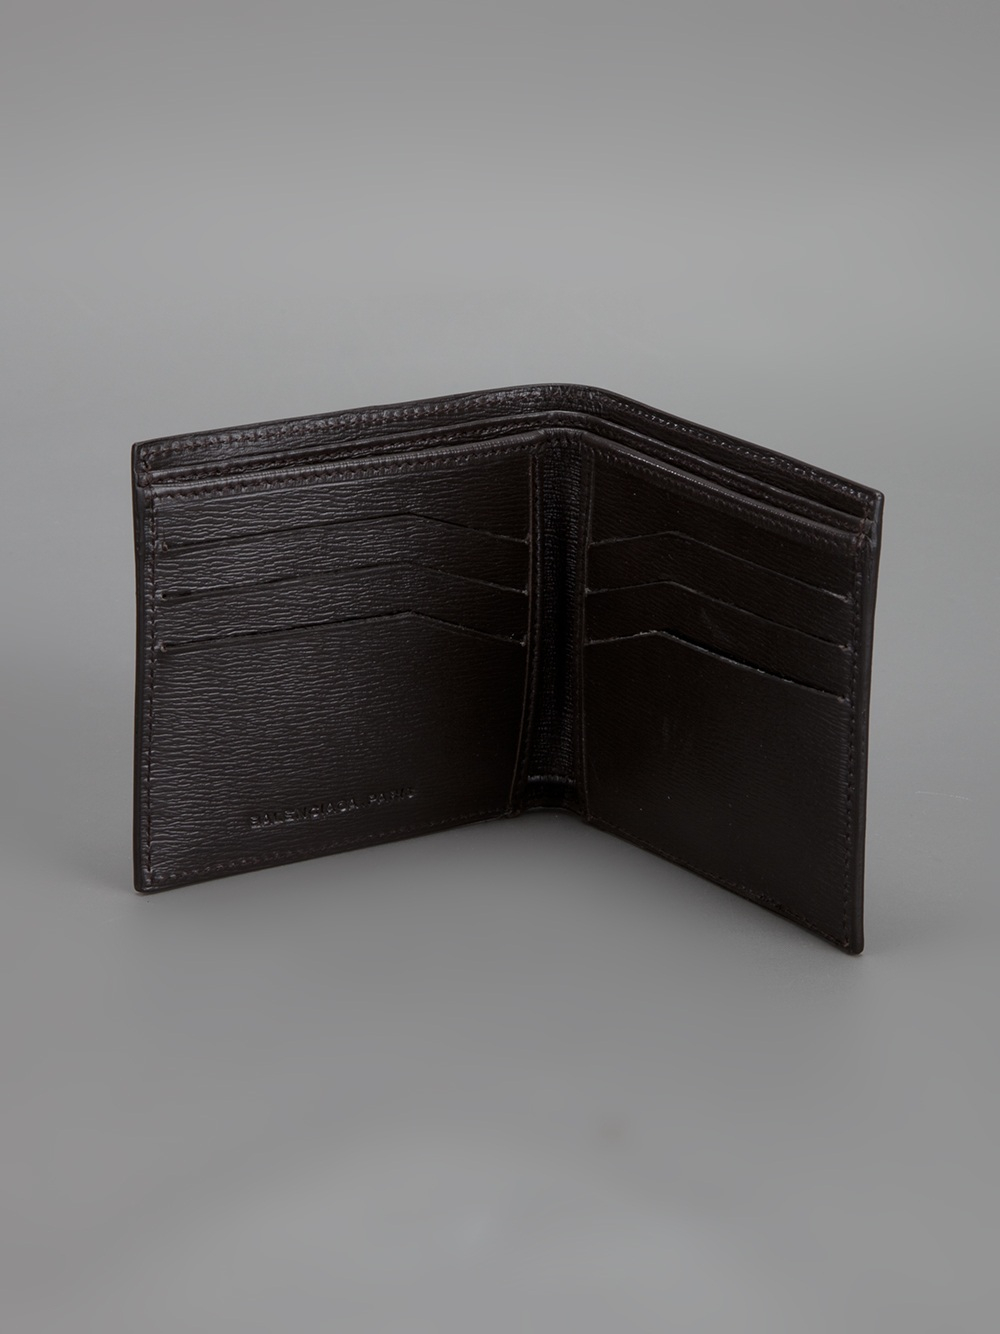 Balenciaga Groseille Bill Fold Wallet in Brown for Men - Lyst